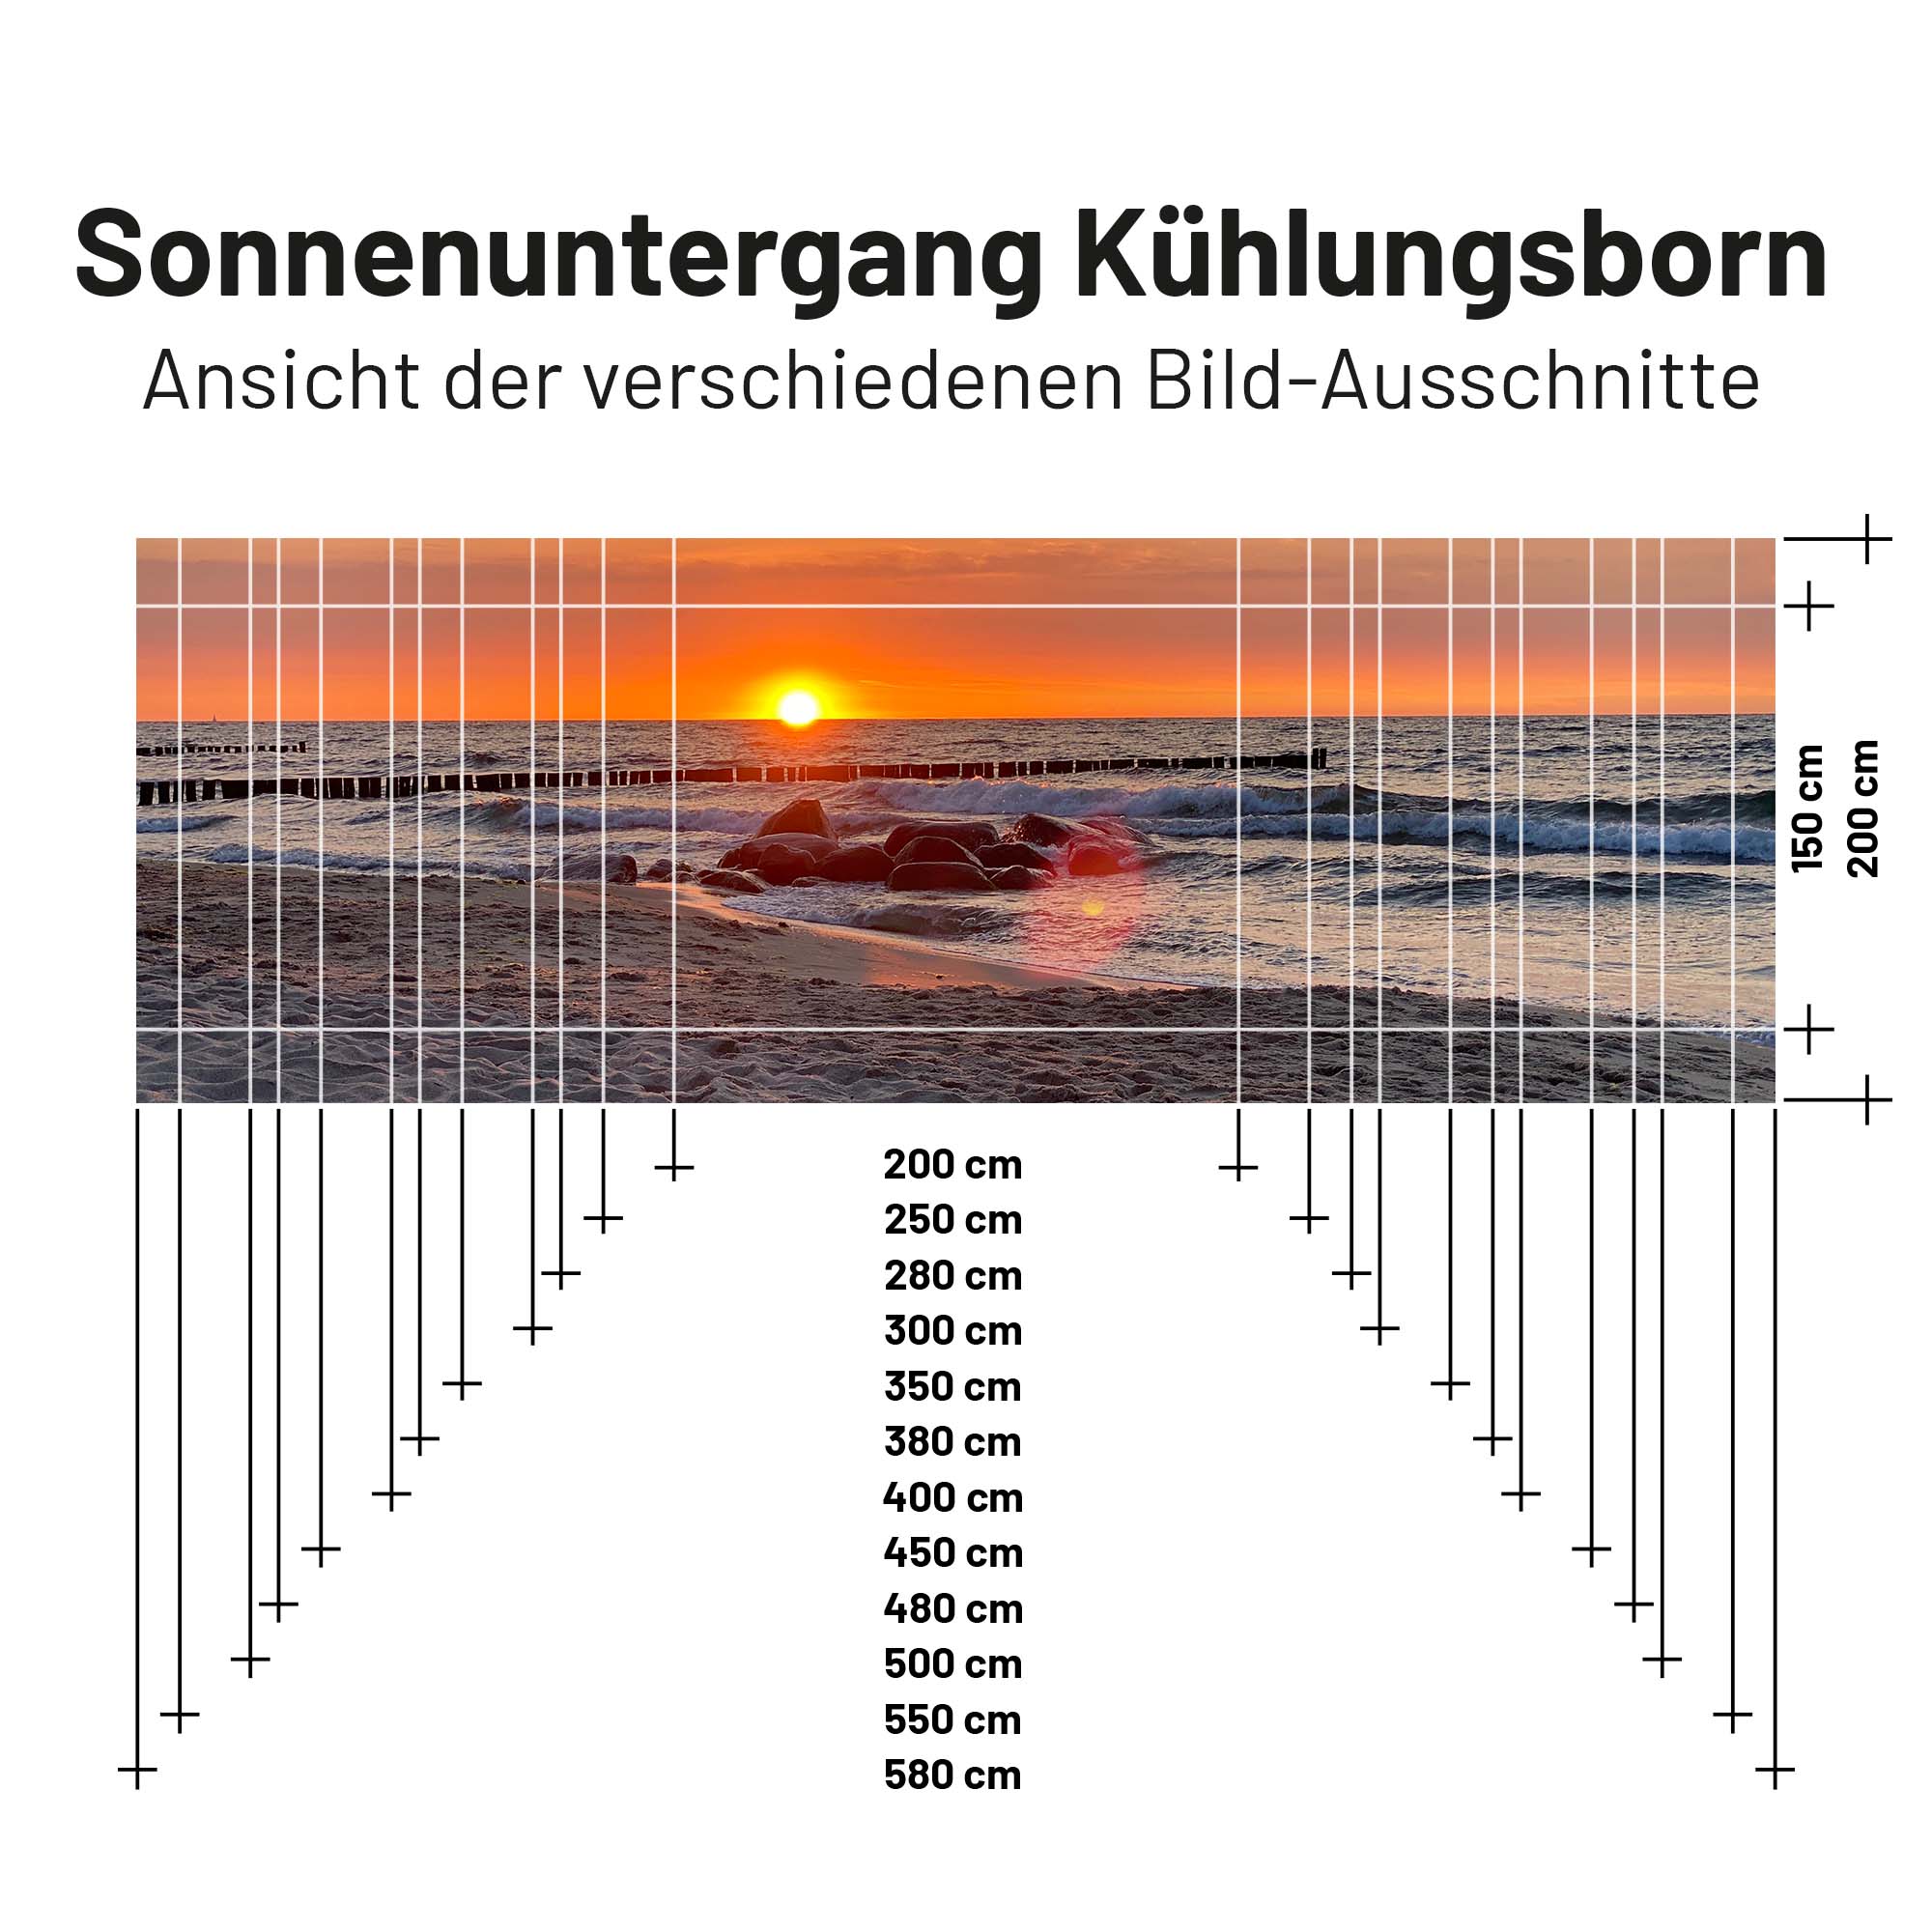 Textil Sonnensegel SONNENUNTERGANG KÜHLUNGSBORN 150cm Hoch